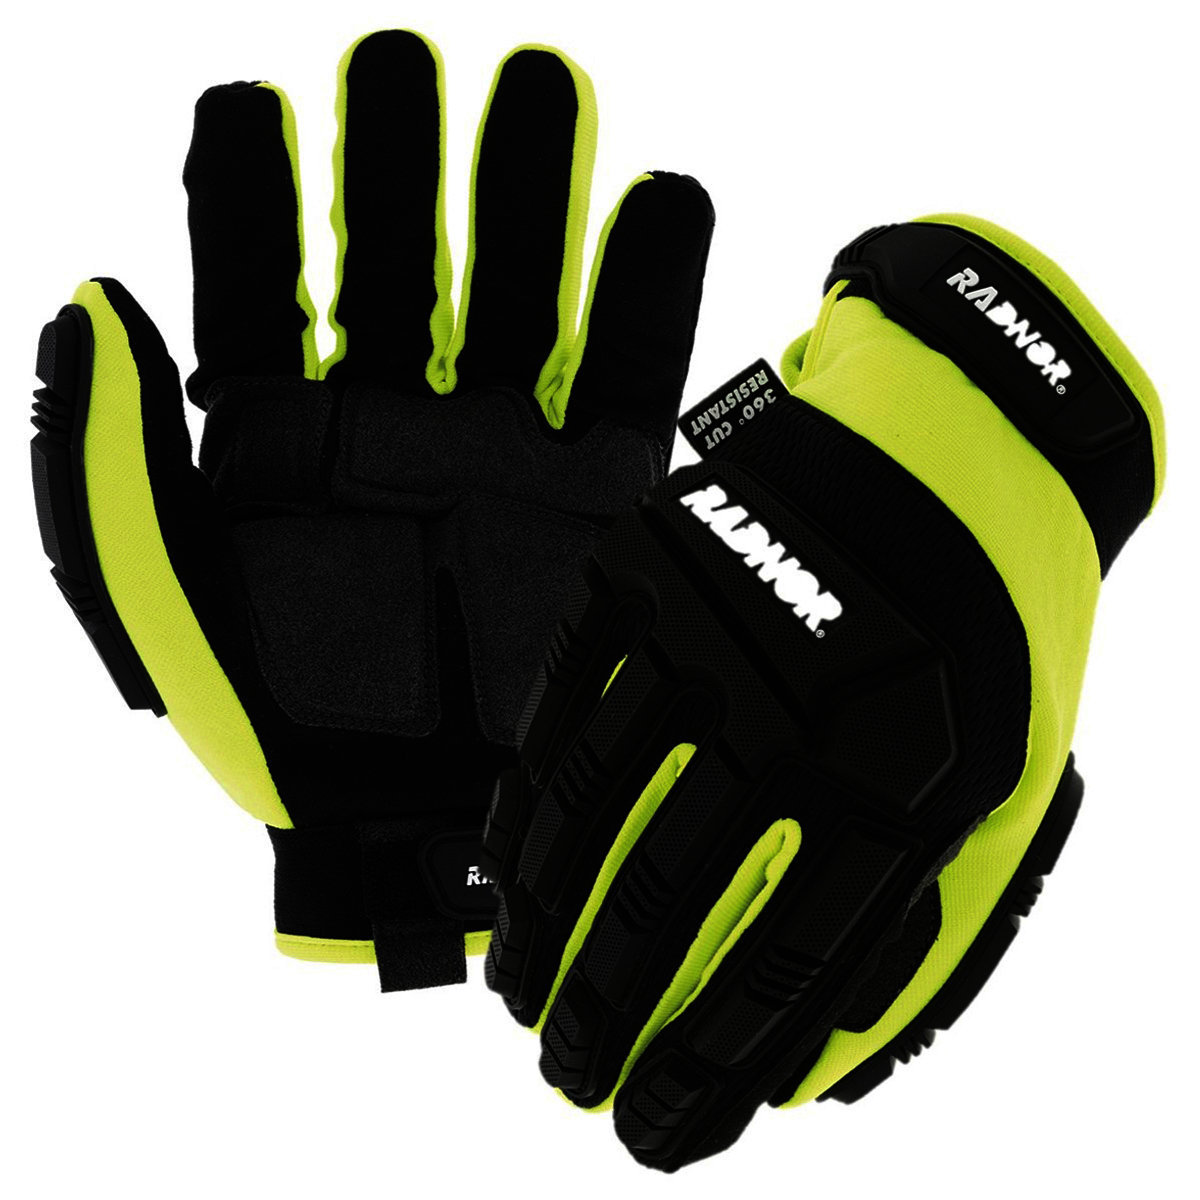 Shock Resistant Touchscreen Leather Biker Gloves